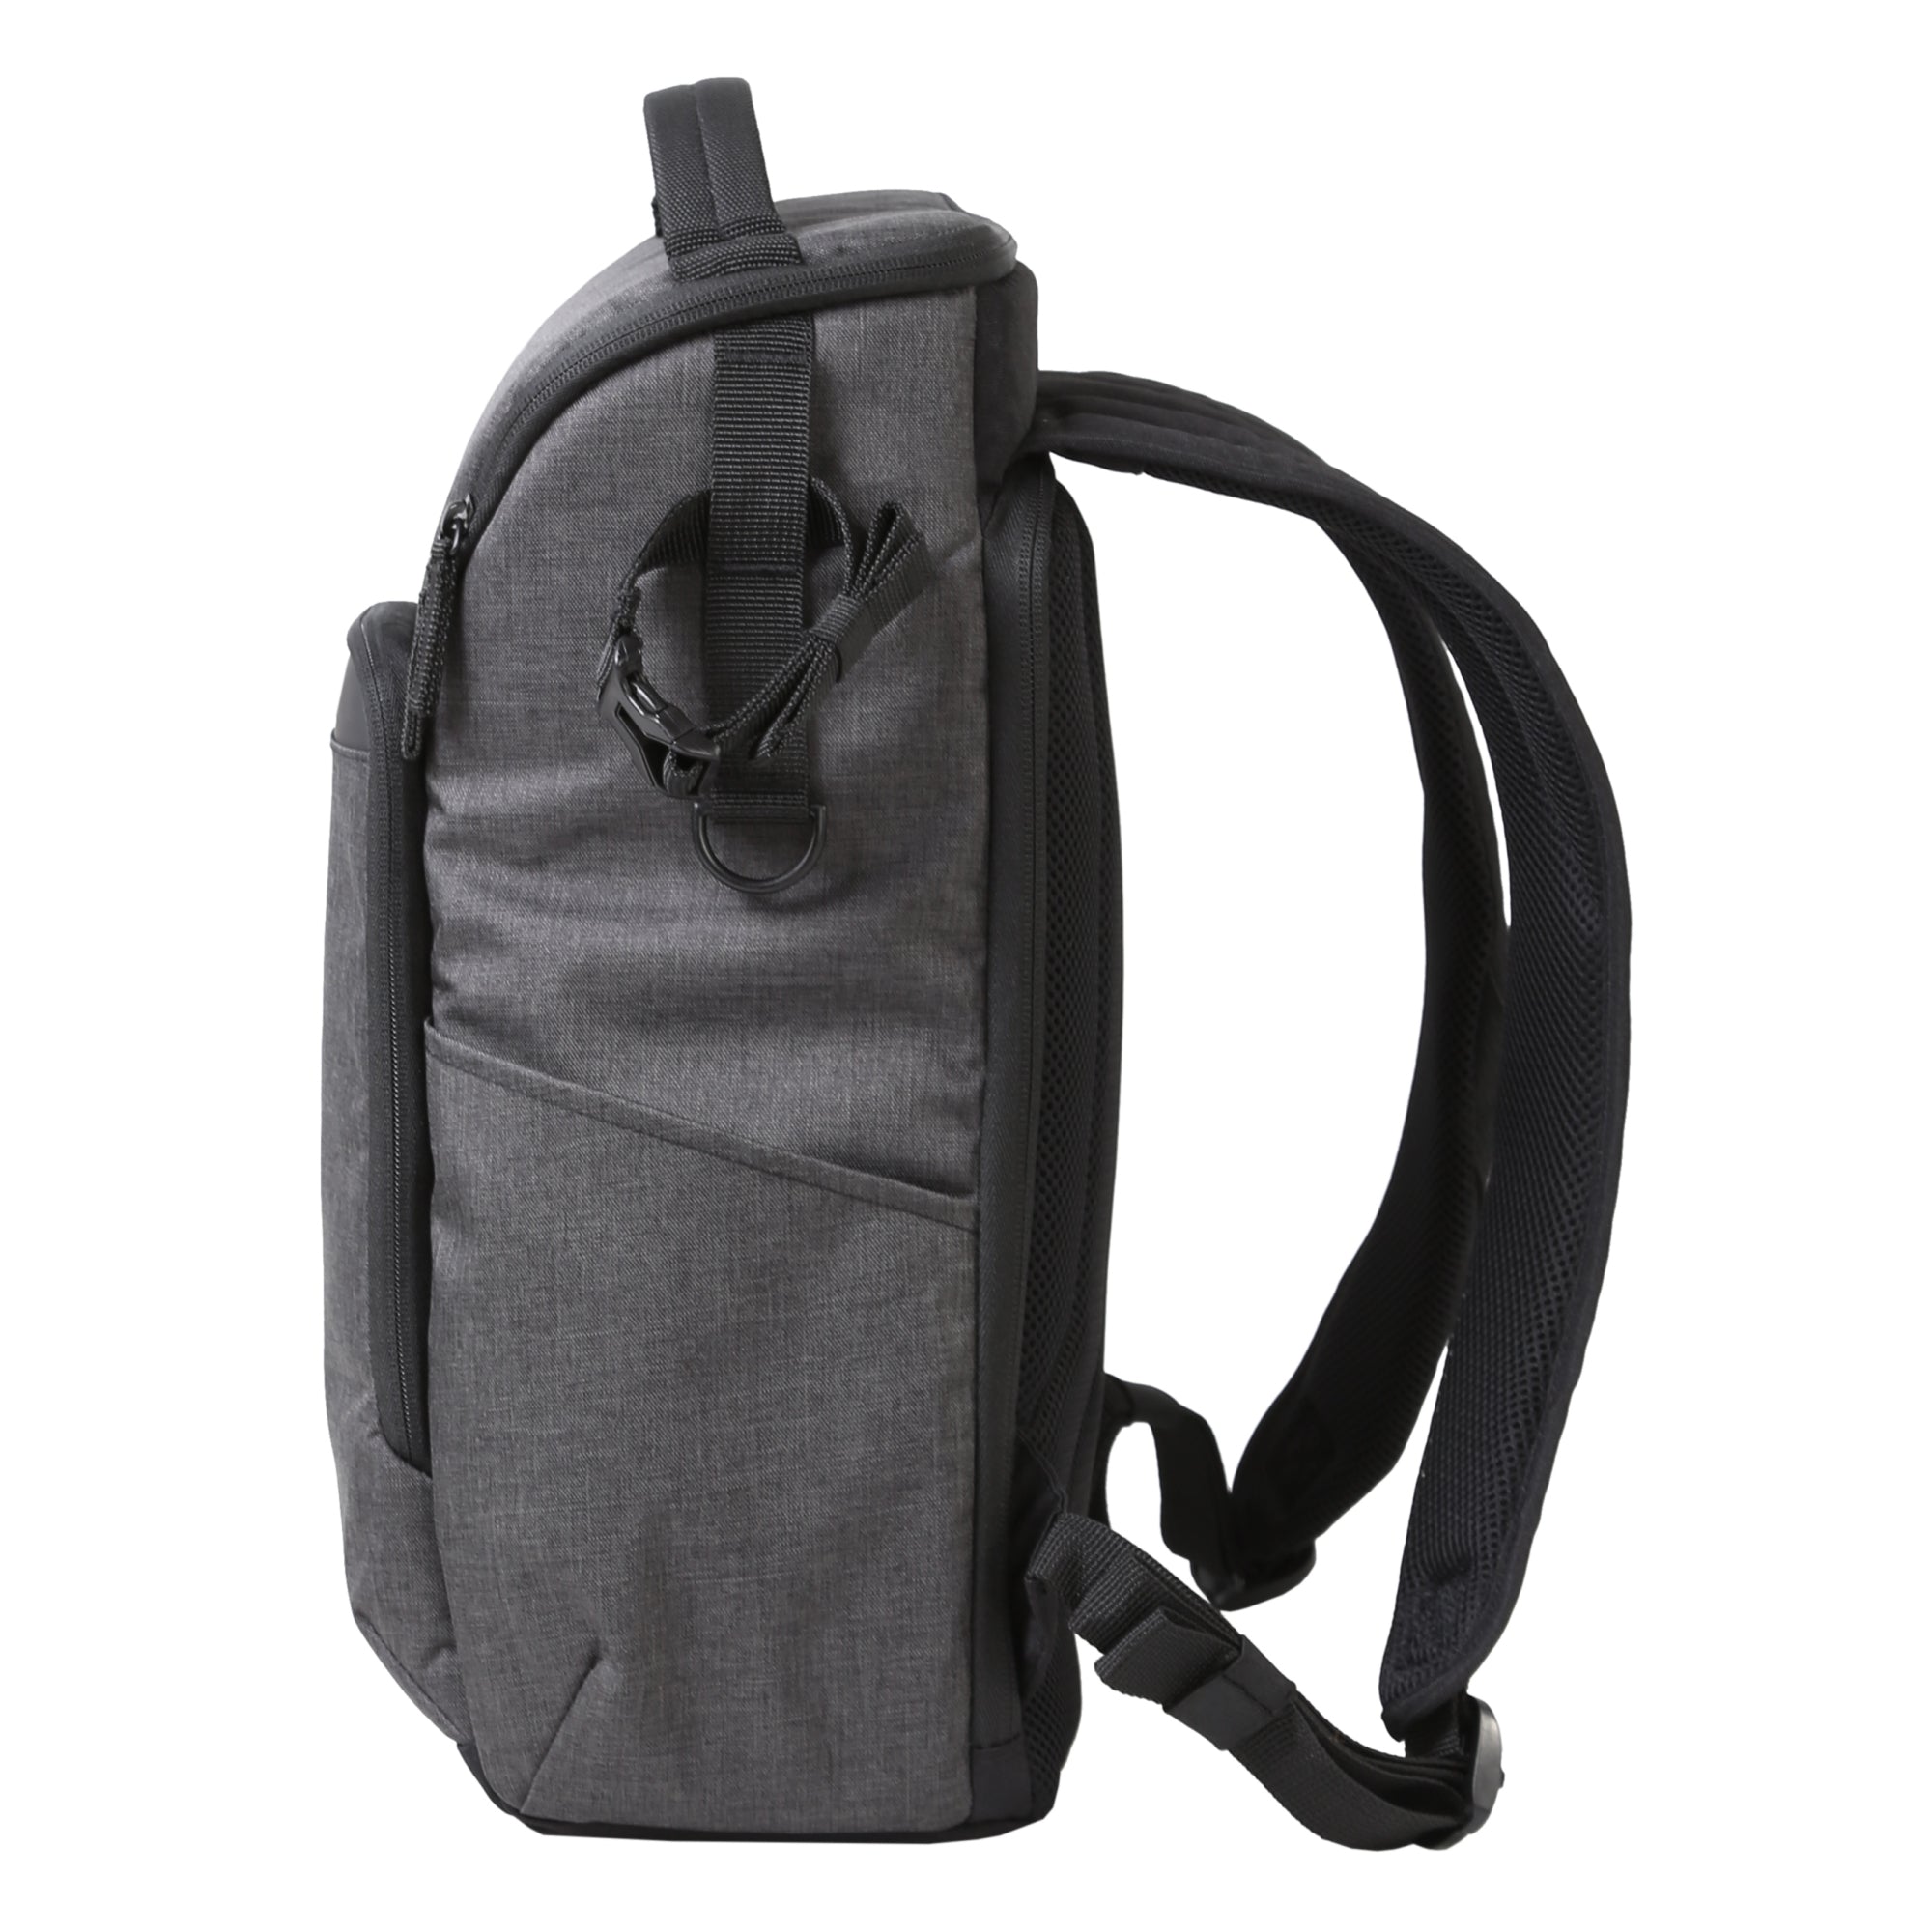 VESTA Aspire 41 GY Backpack - Grey – Vanguard World UK